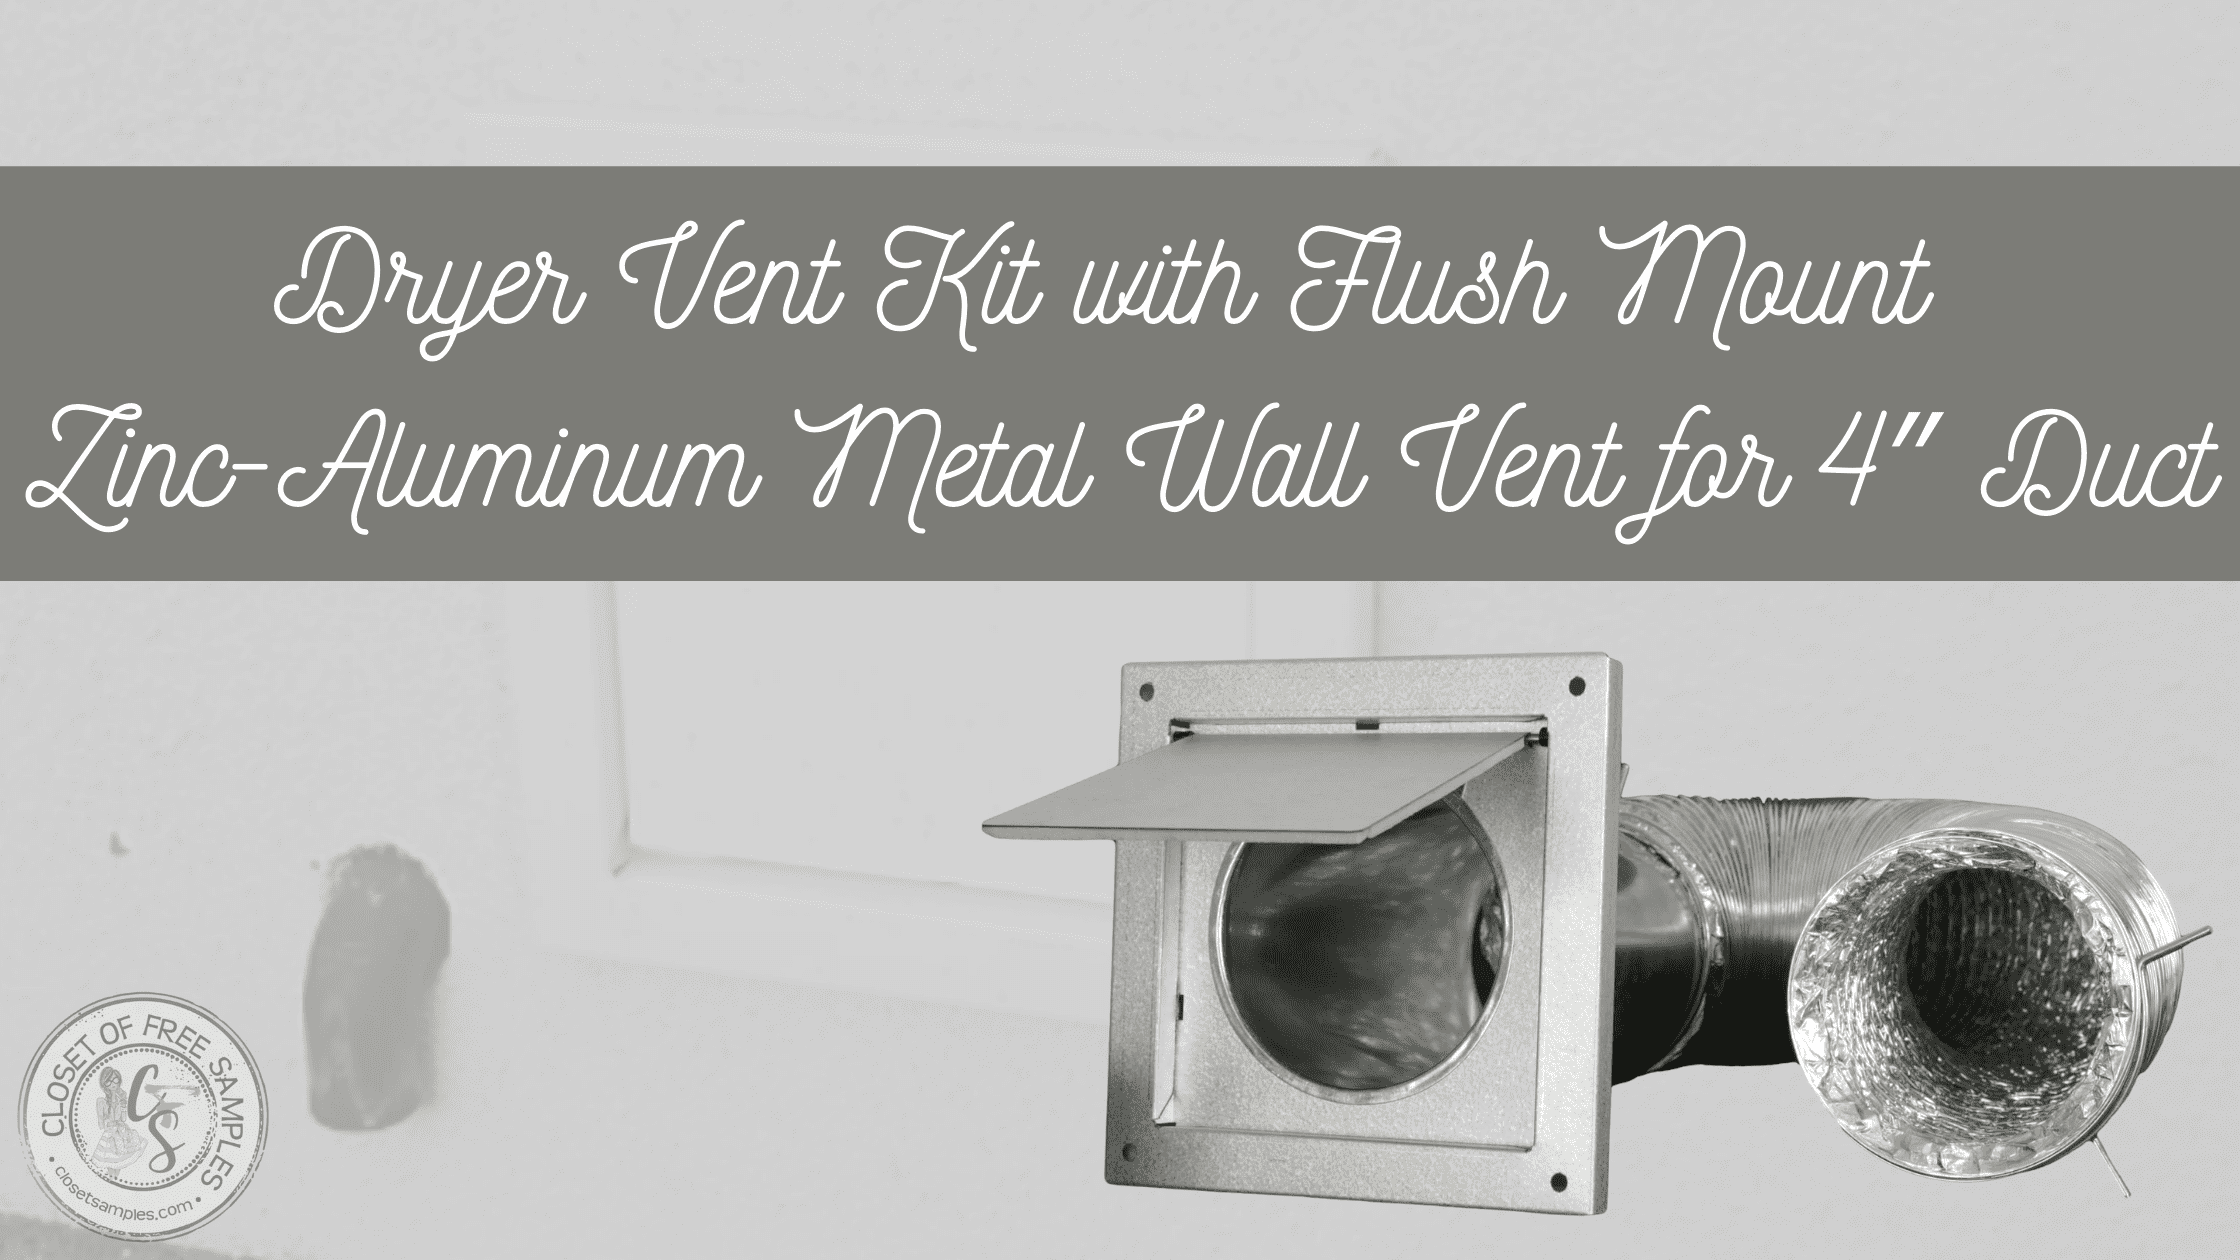 Dryer-Vent-Kit-with-Flush-Mount-Zinc-Aluminum-Metal-Wall-Vent-closetsamples-review.png